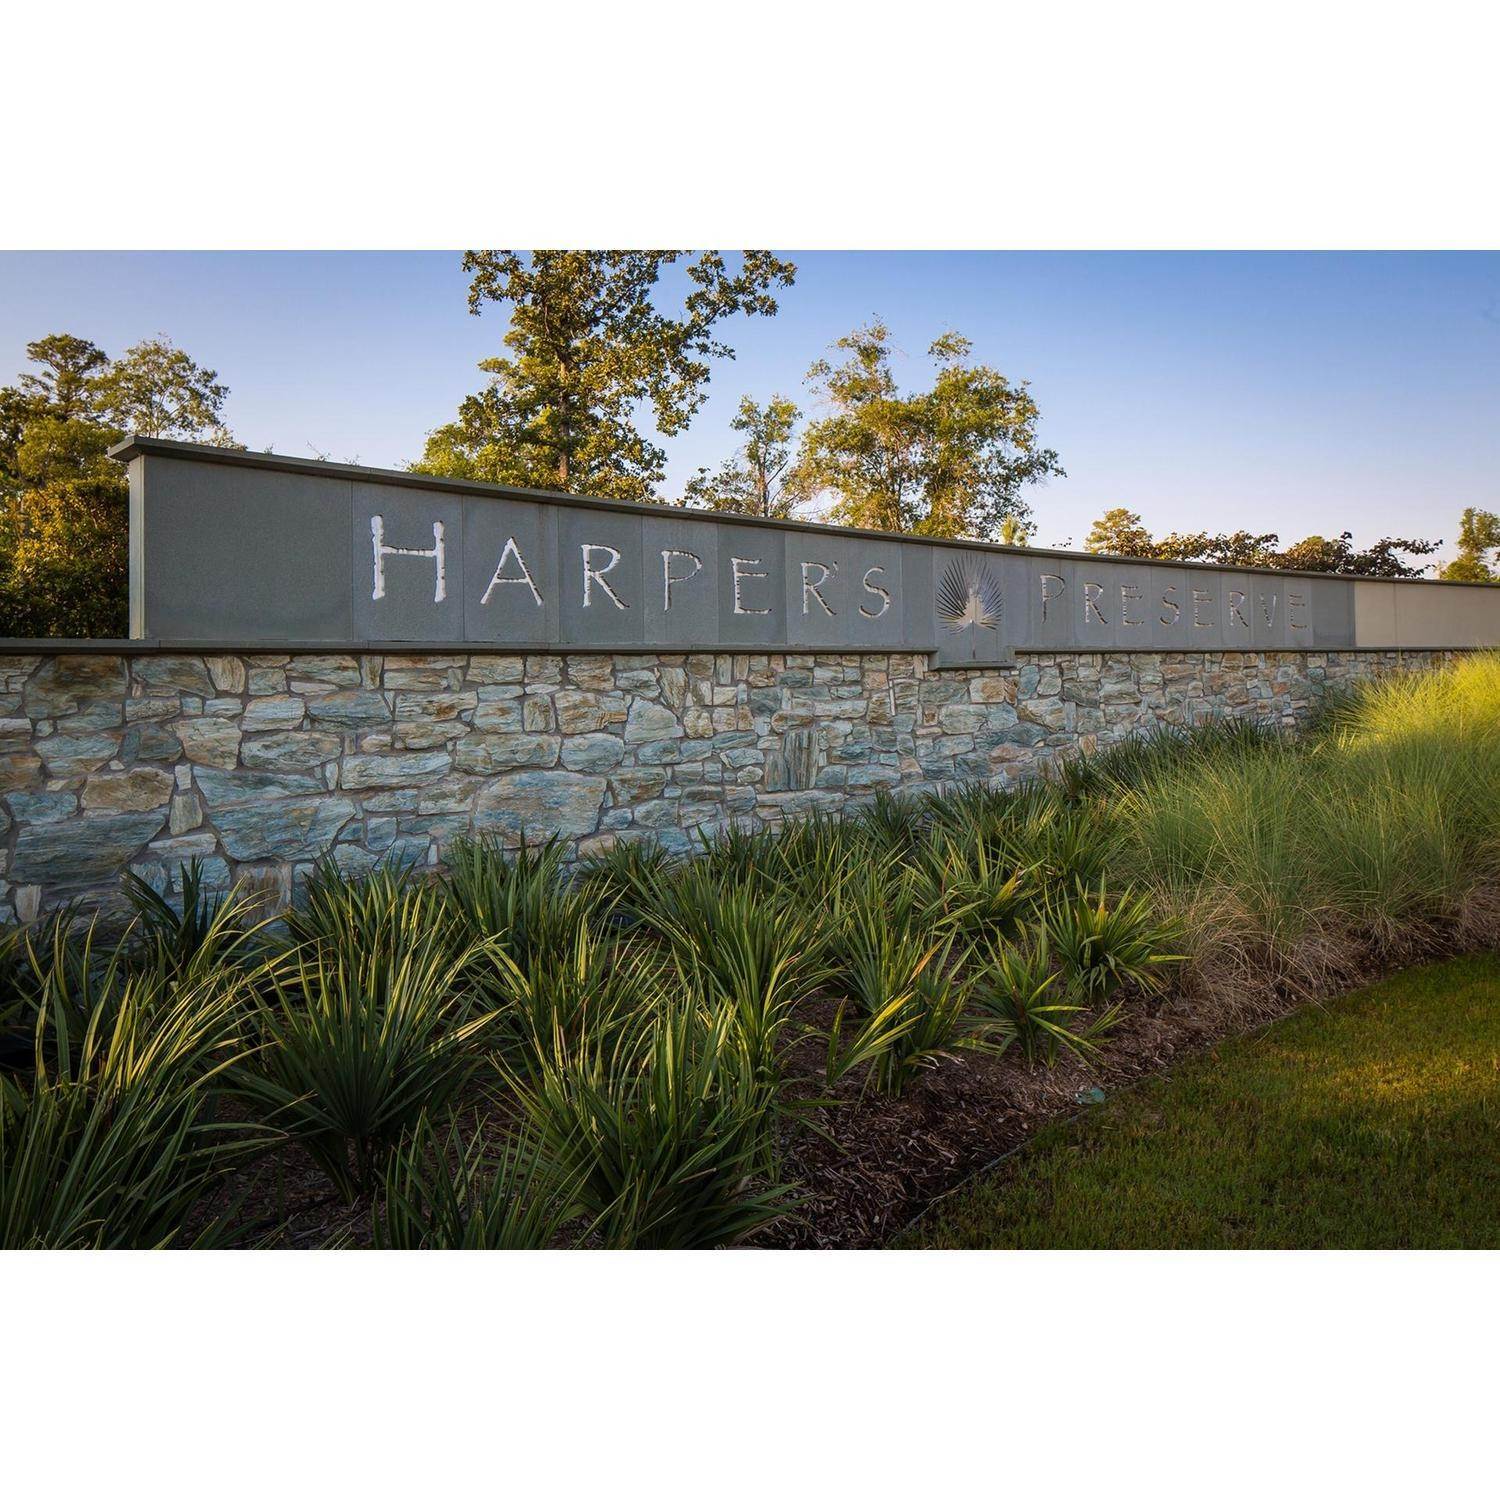 Harper's Preserve building at 410 Lake Day Drive, Conroe, TX 77385